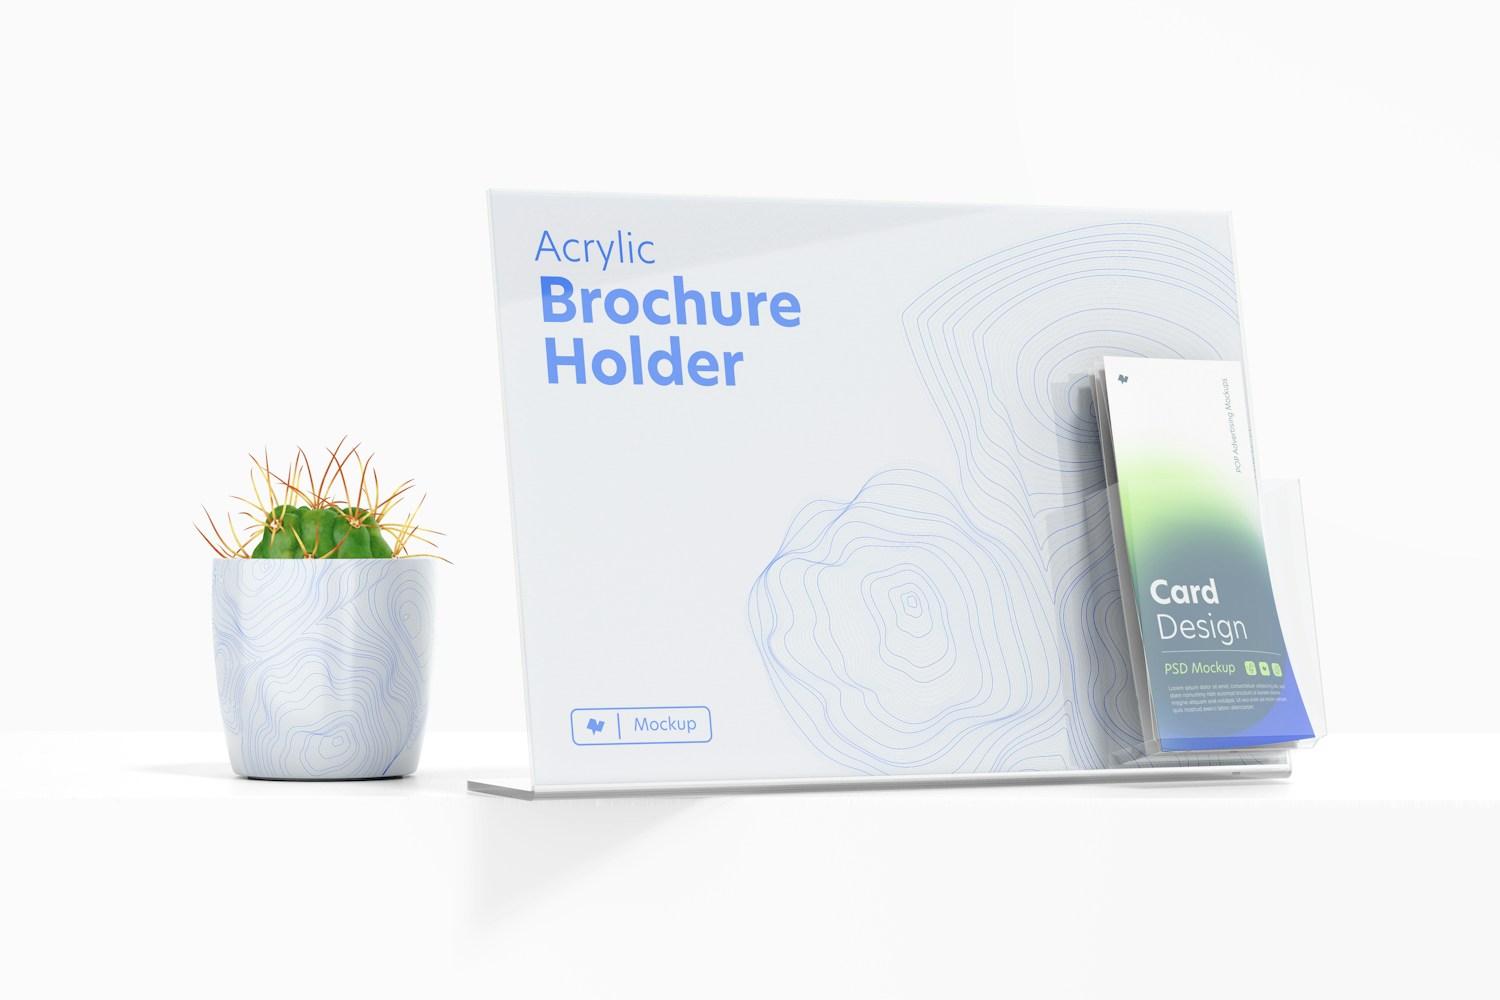 Acrylic Brochure Holder with Plant Pot Mockup